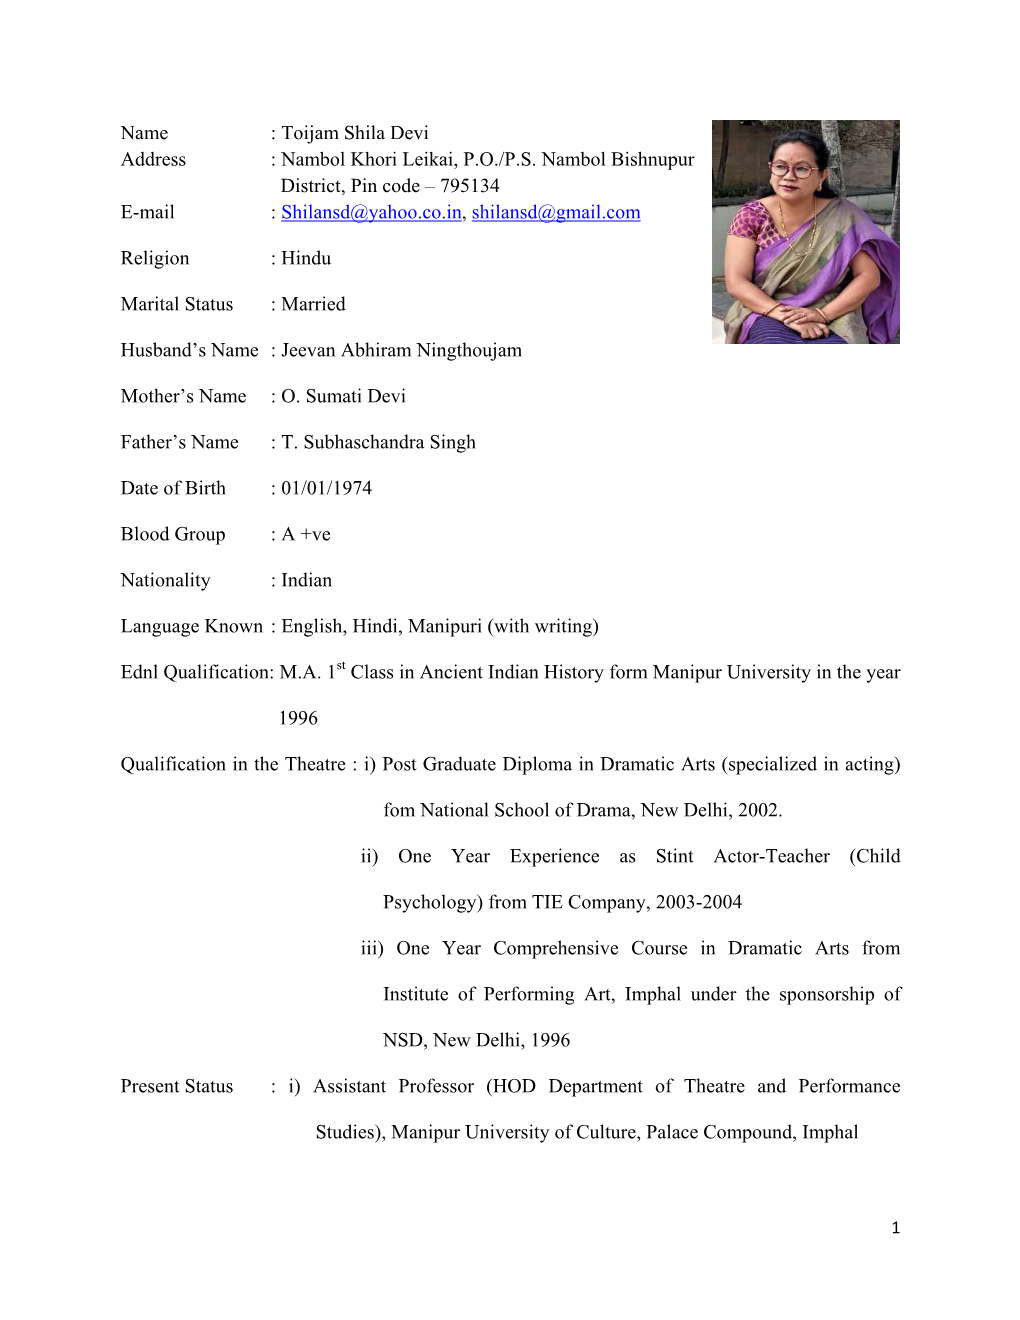 Toijam Shila Devi Address : Nambol Khori Leikai, P.O./P.S